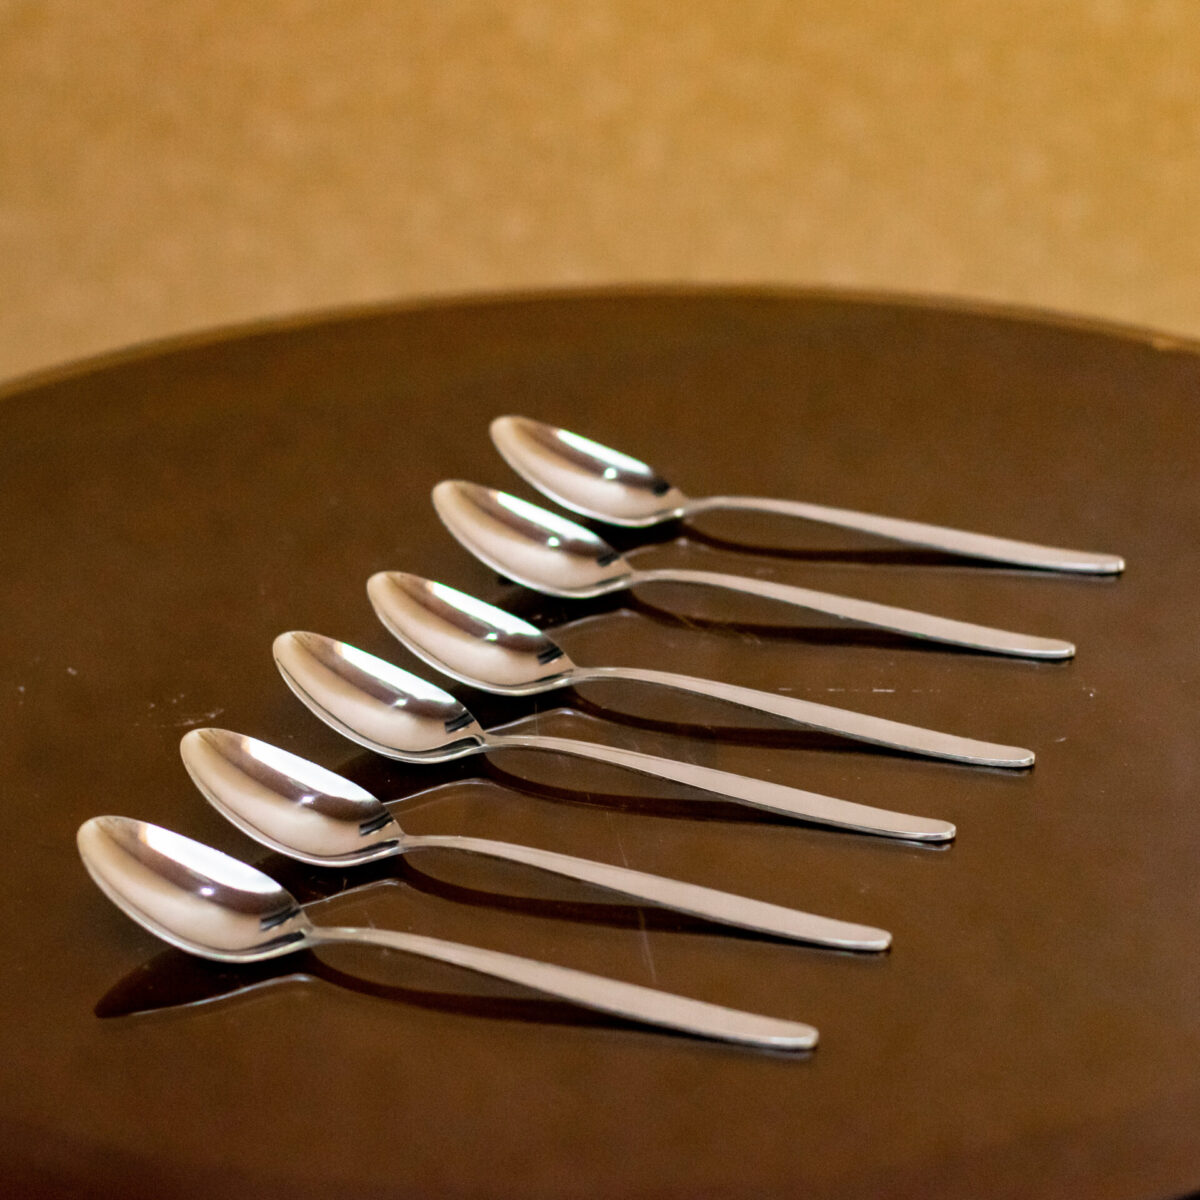 mono-table-spoons-6-pc-set-015724